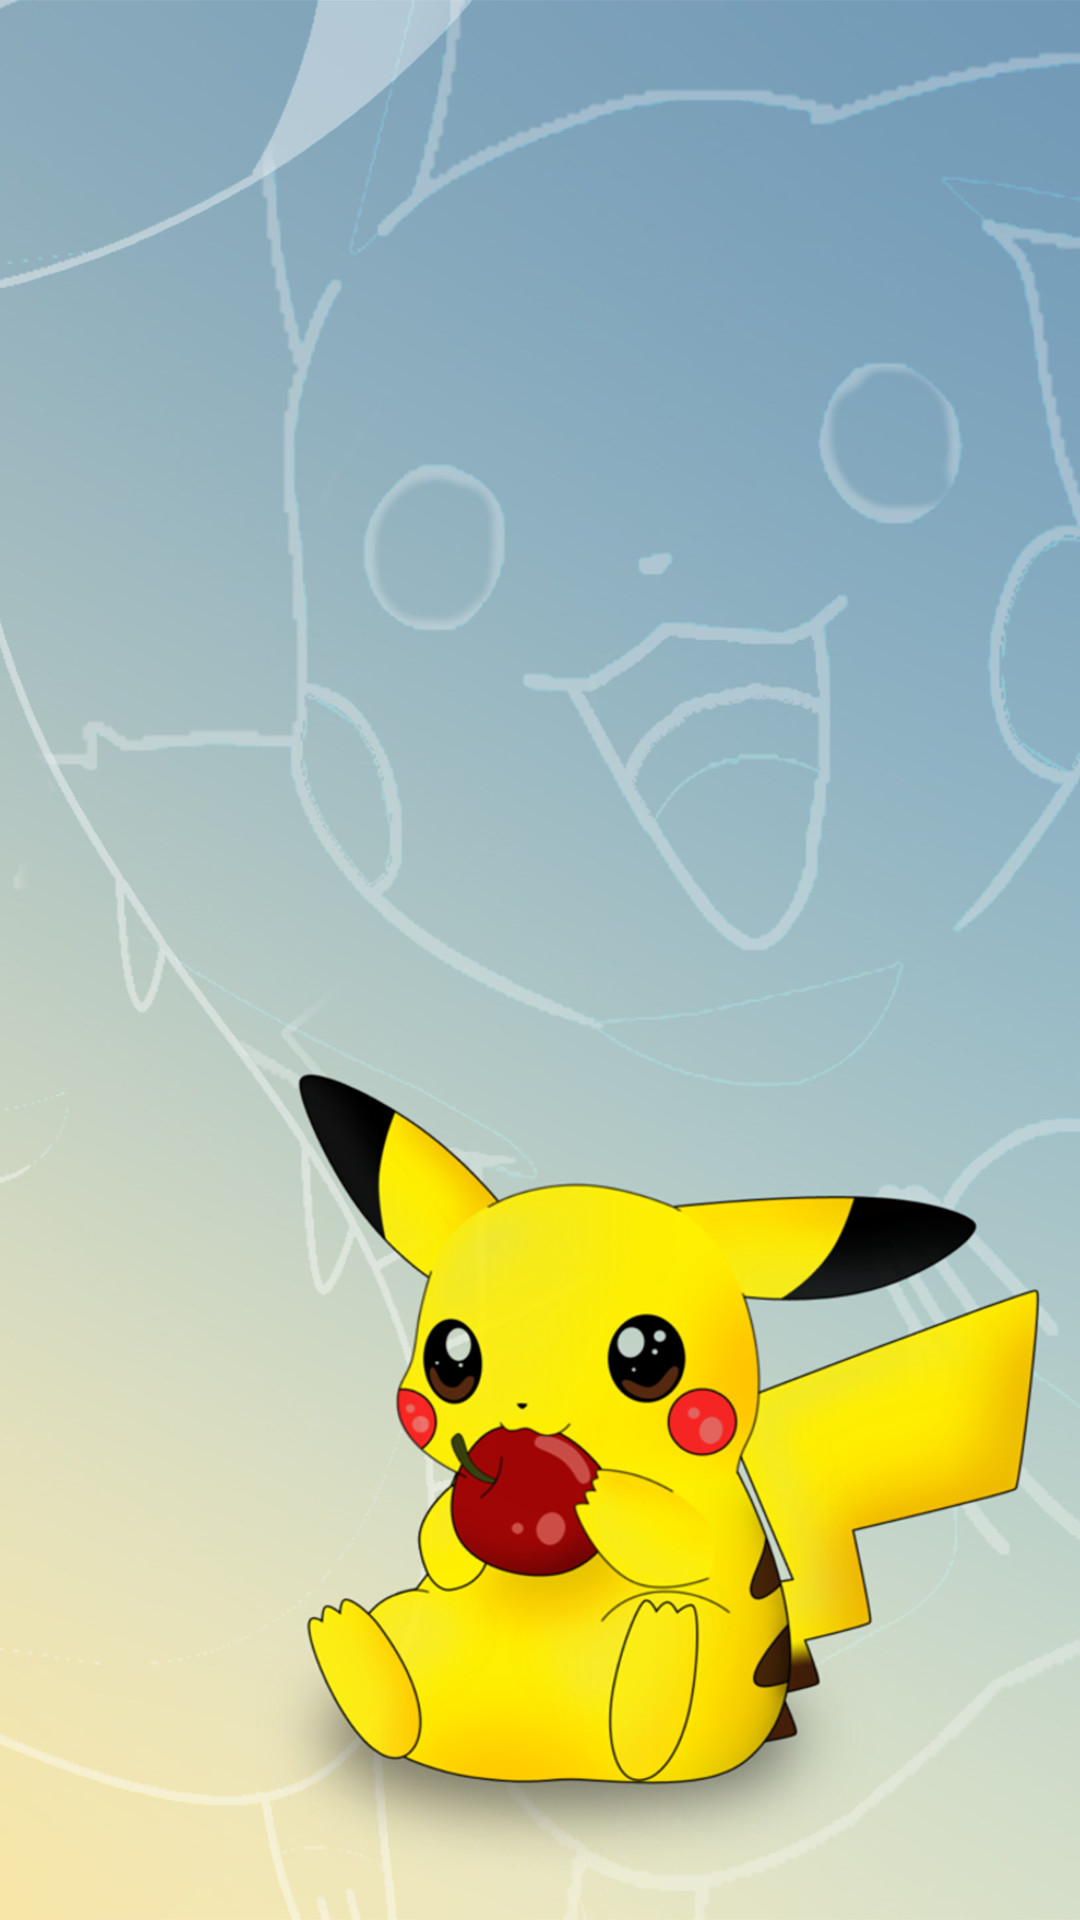 1080x1920 Pikachu wallpaper HD for desktop.